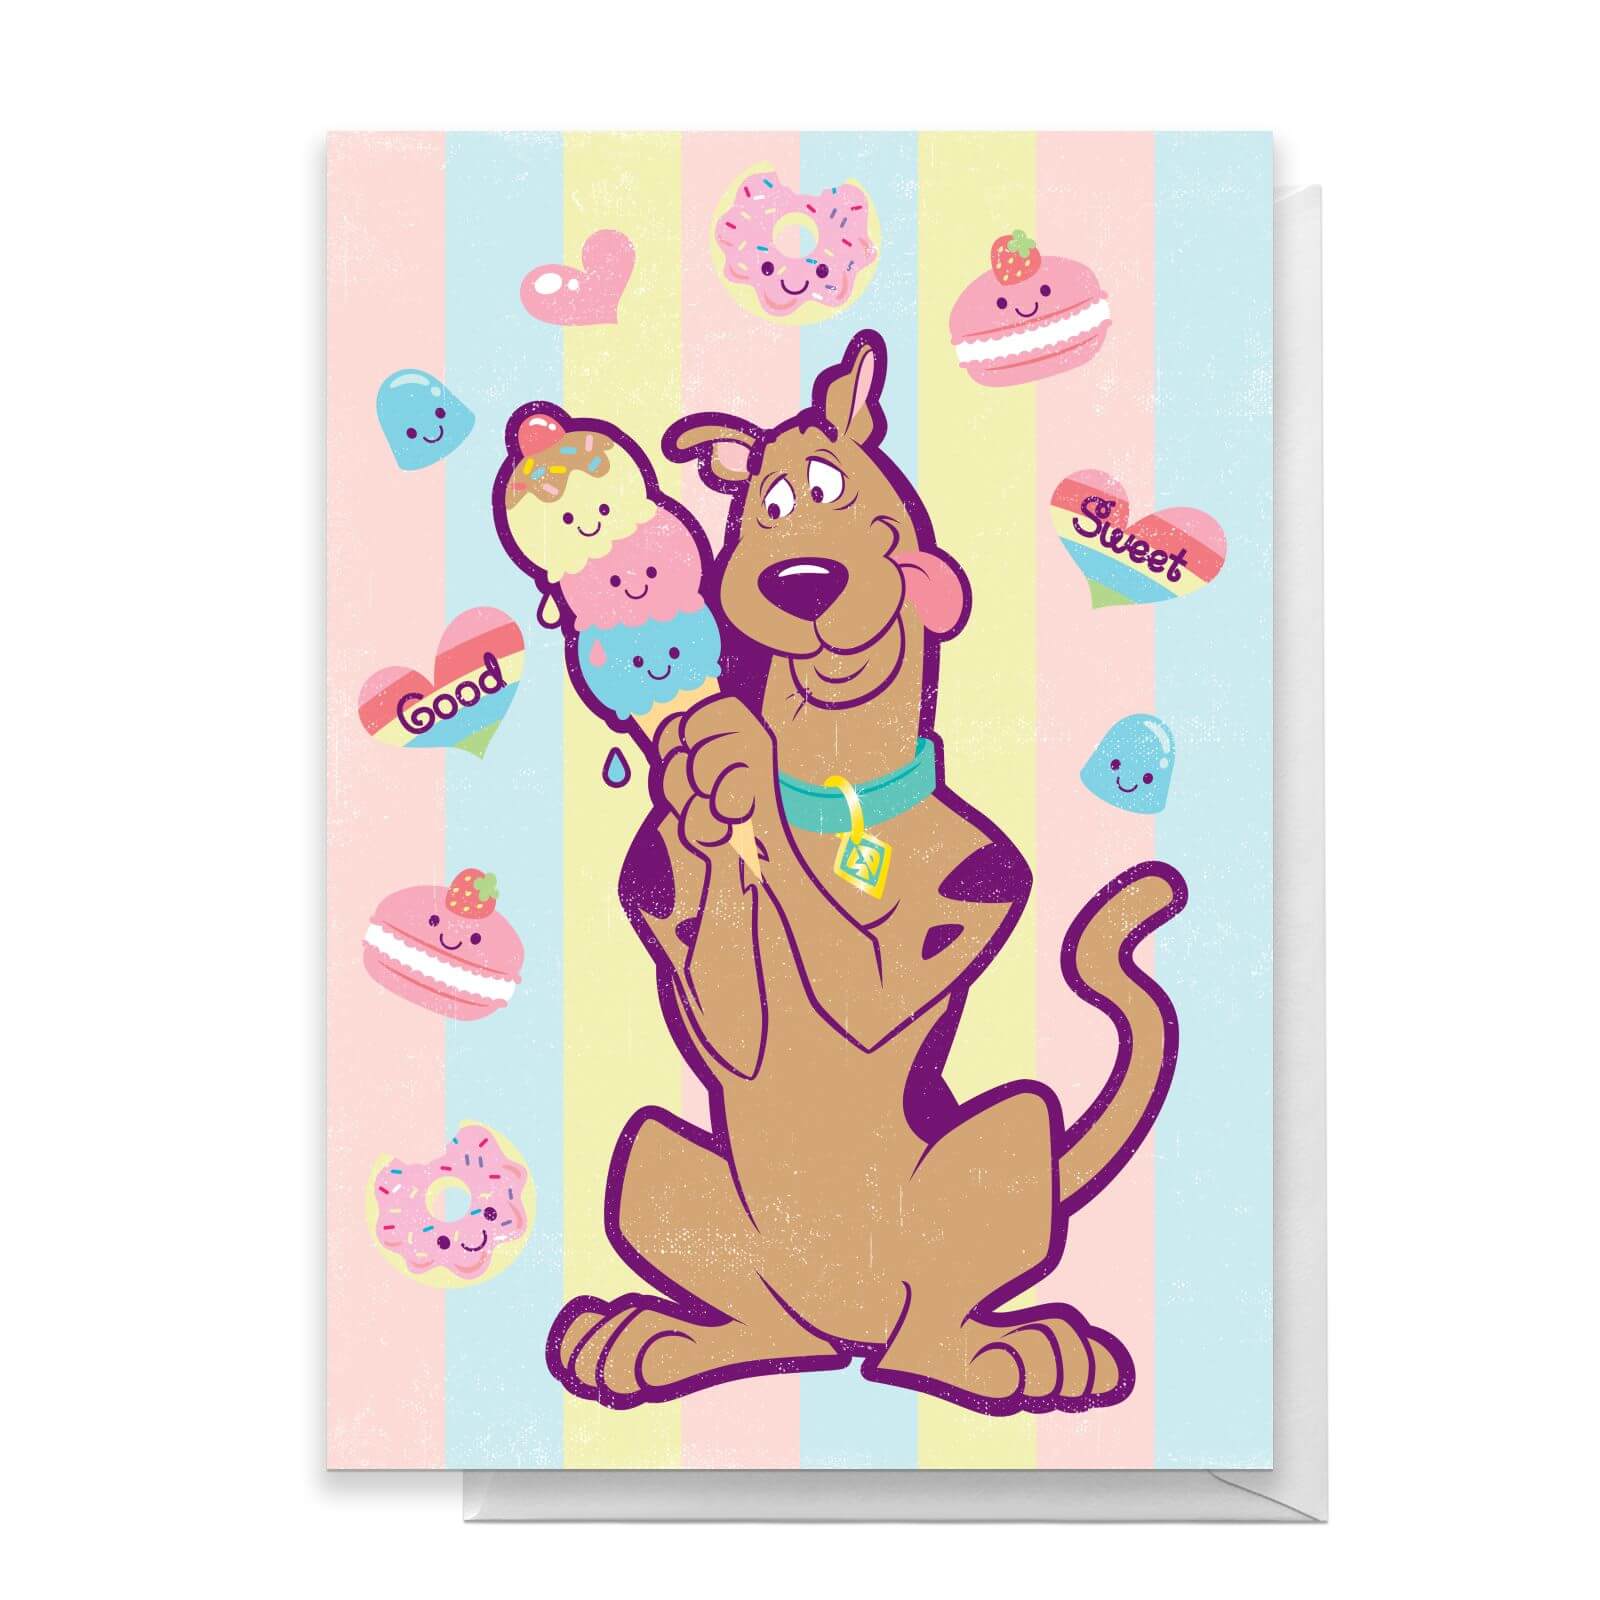 Scooby Doo Greetings Card - Standard Card